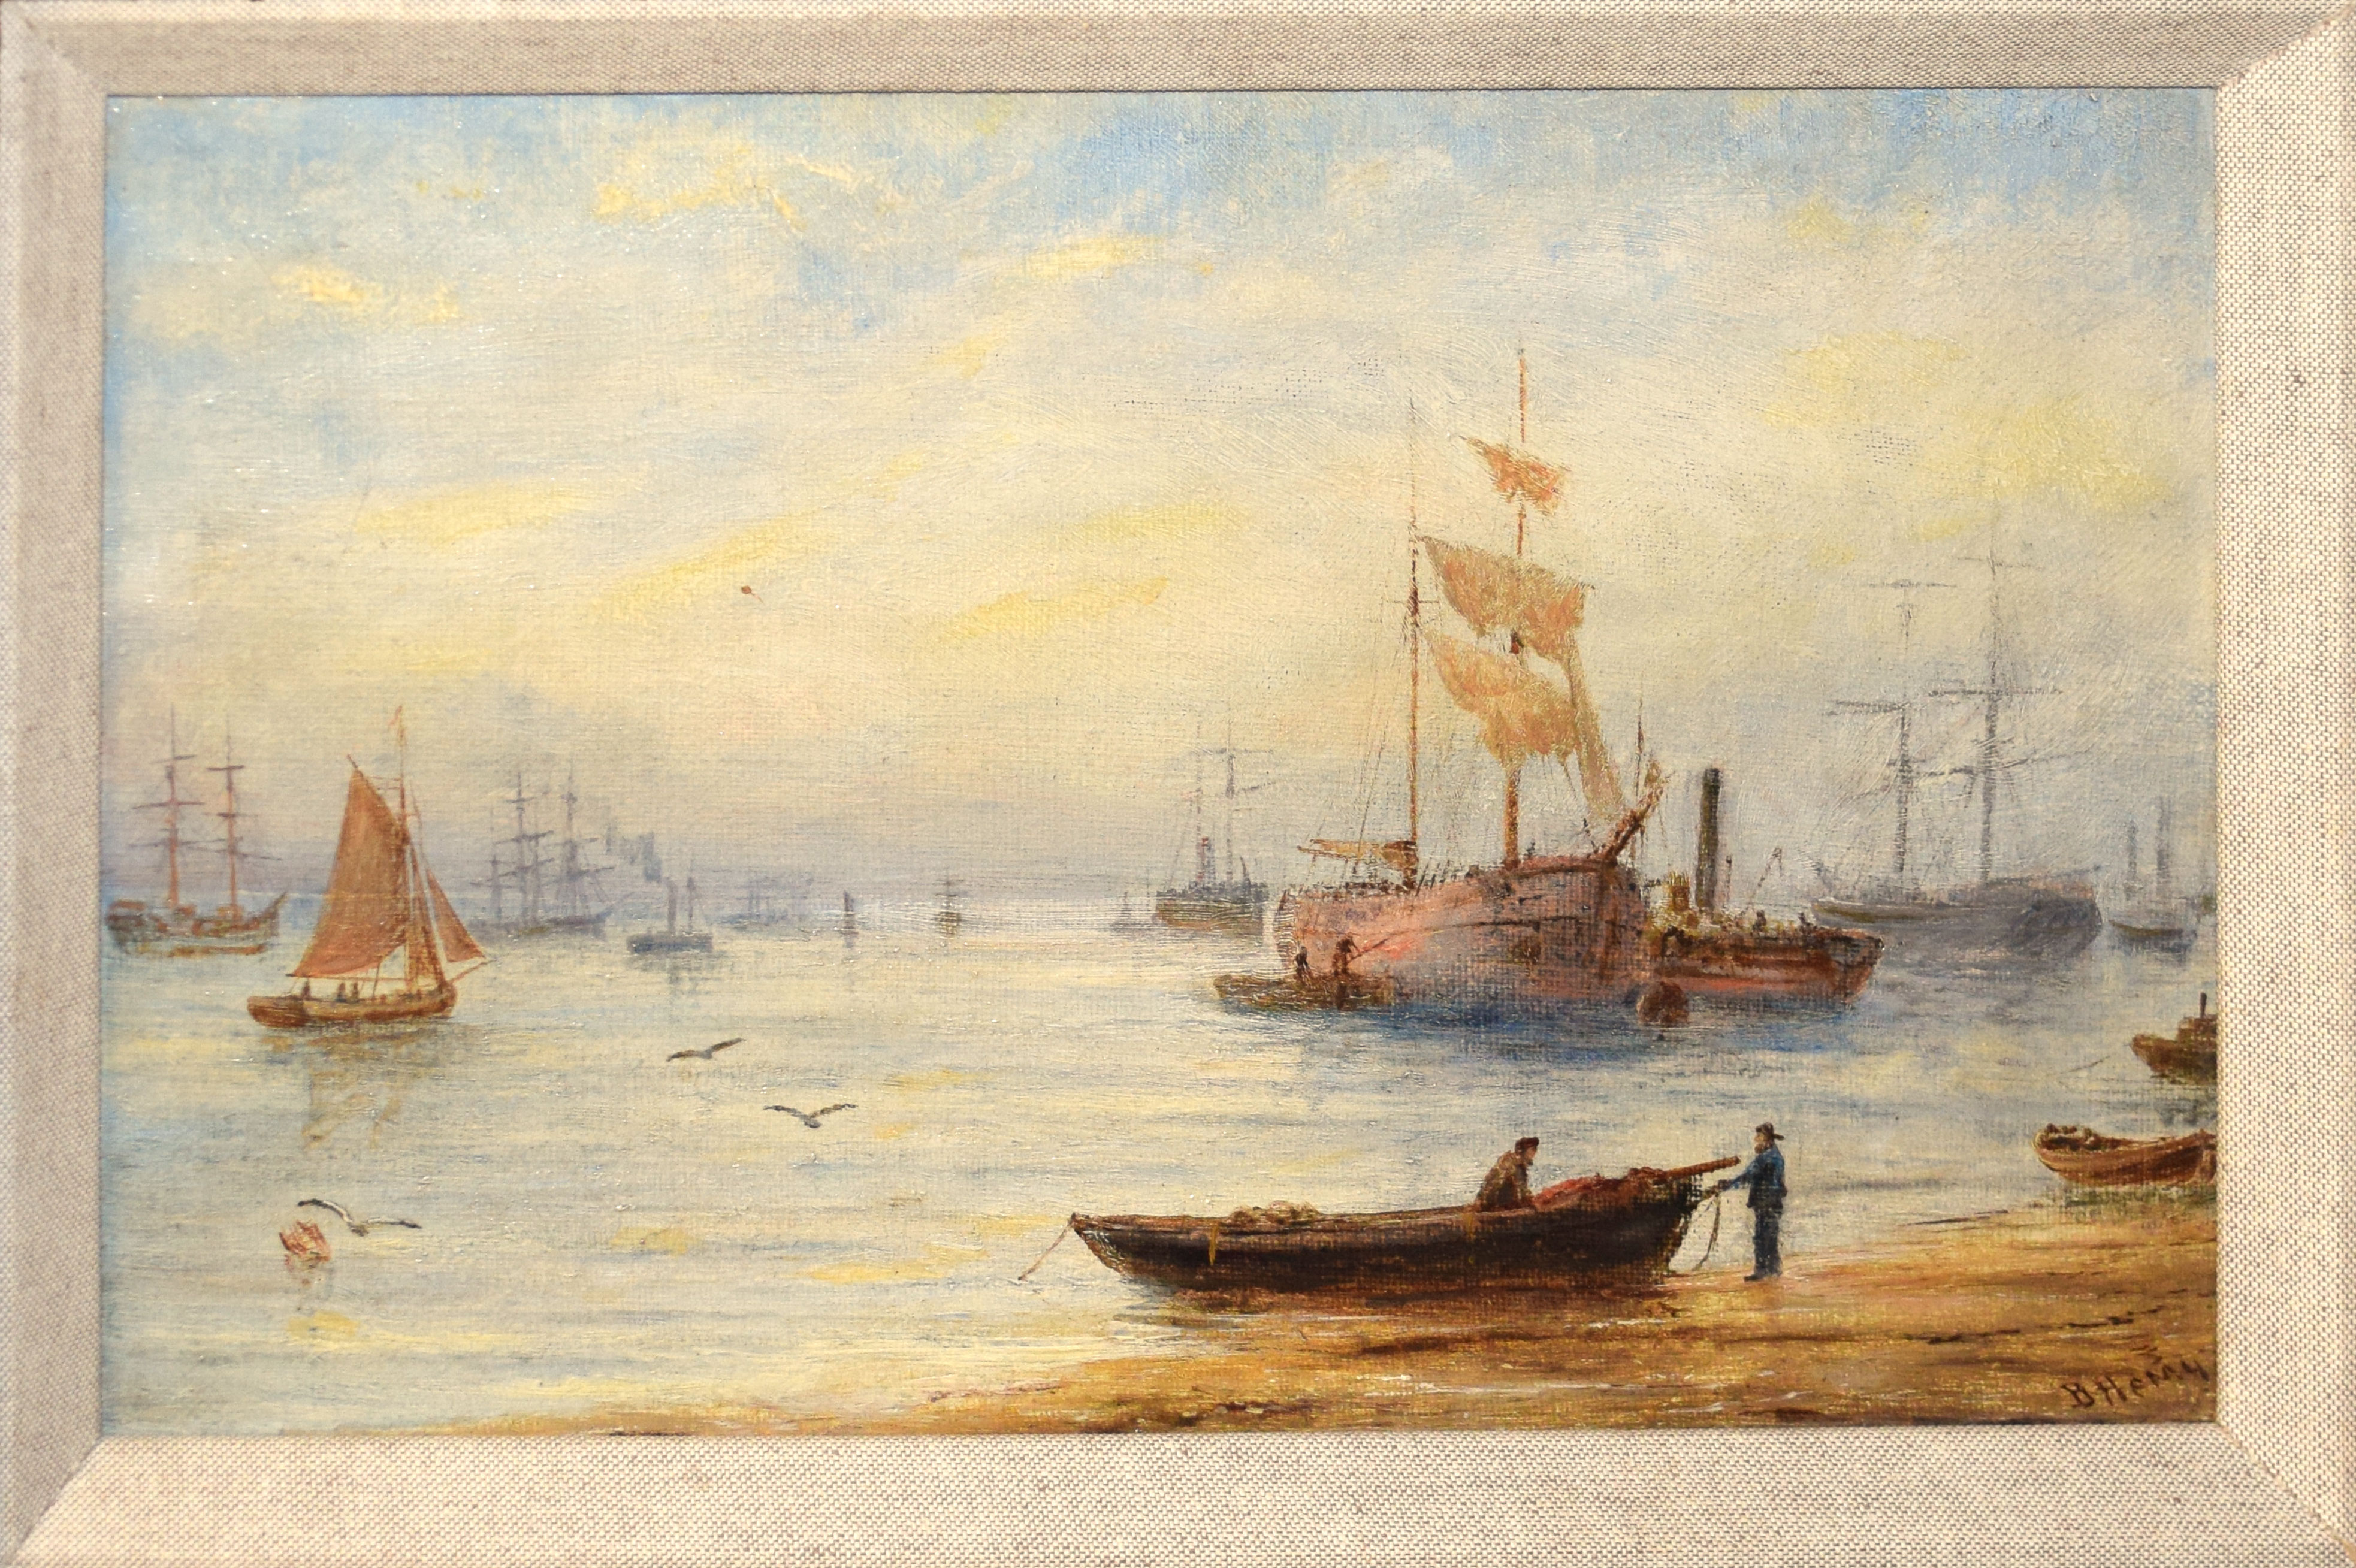 English School (19th century), Coastal scene with shipping, oil on canvas, bearing signature B